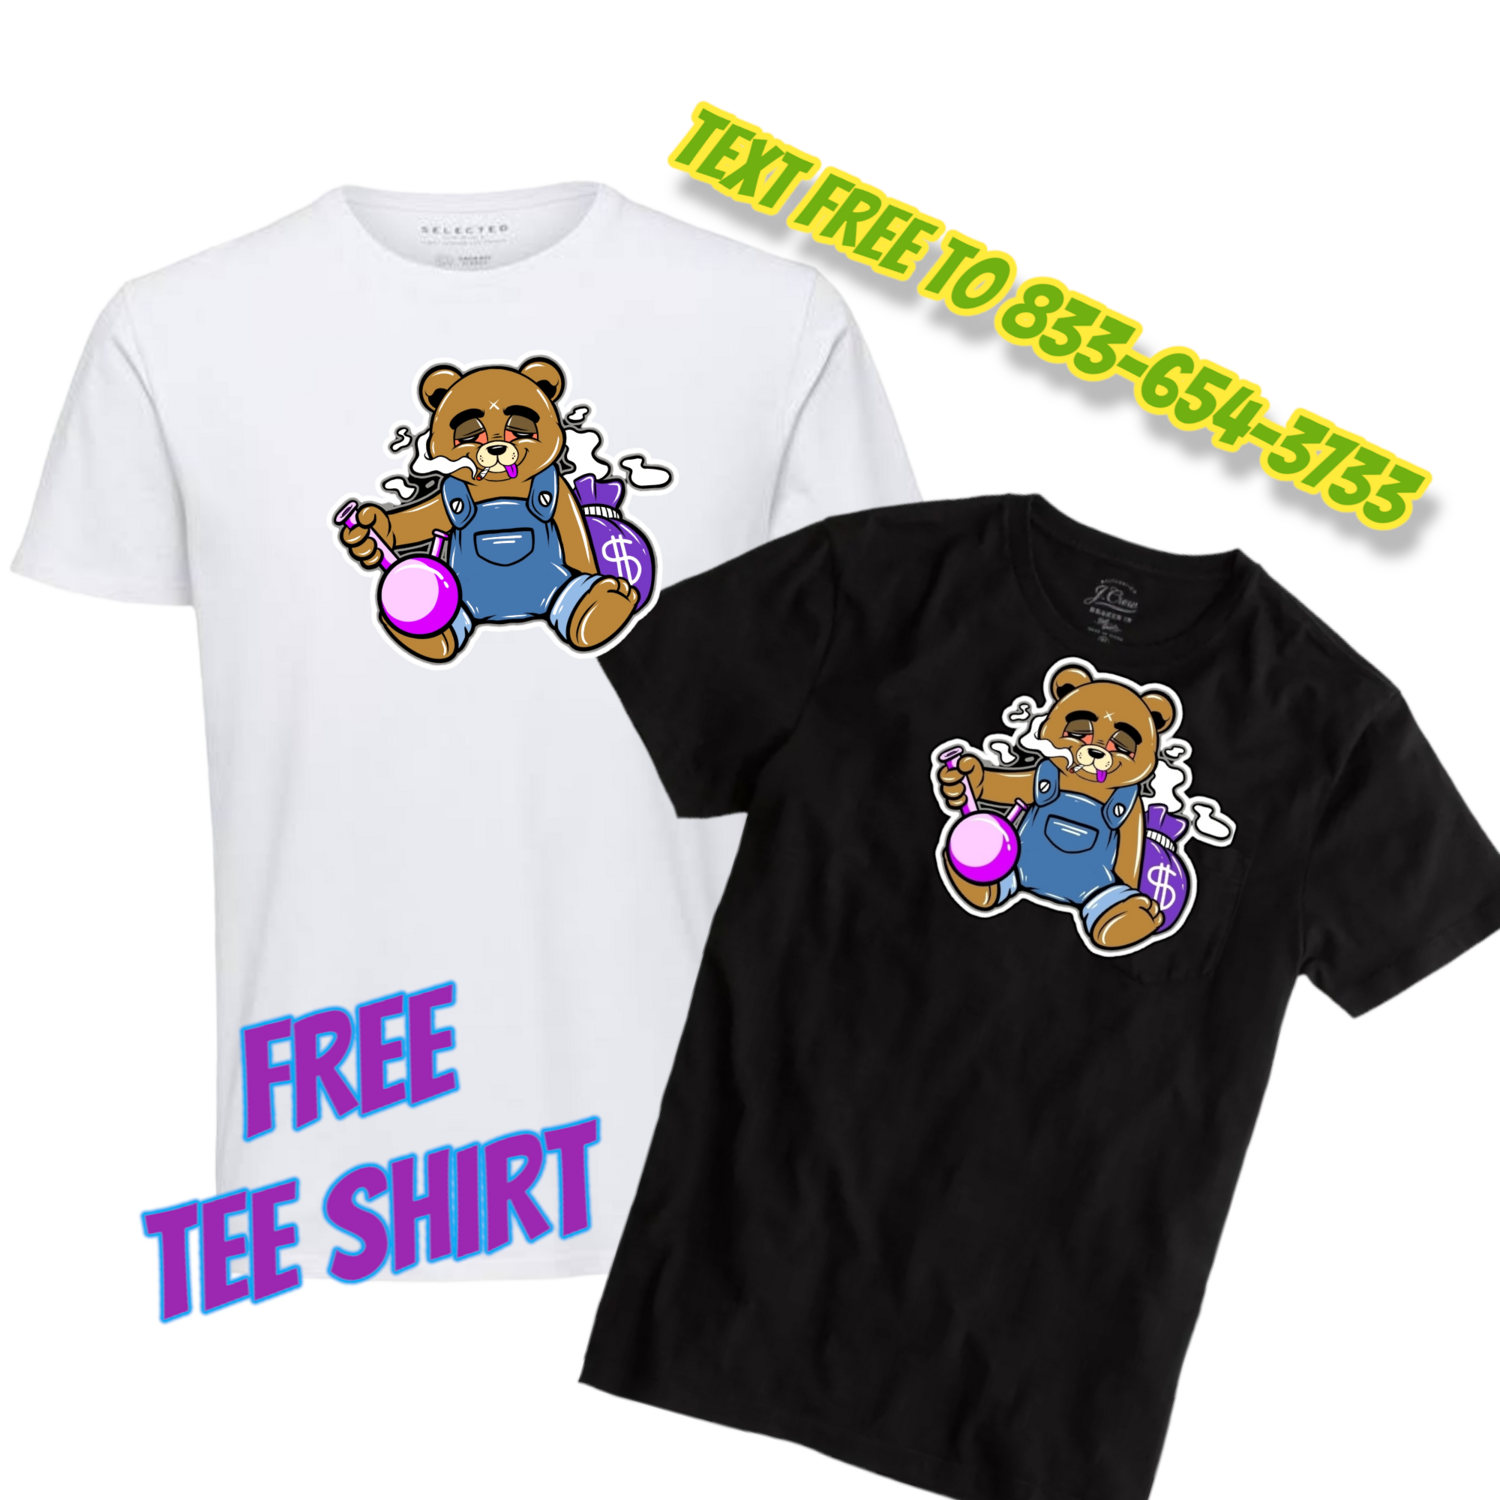 Free tee shirt stoner bear